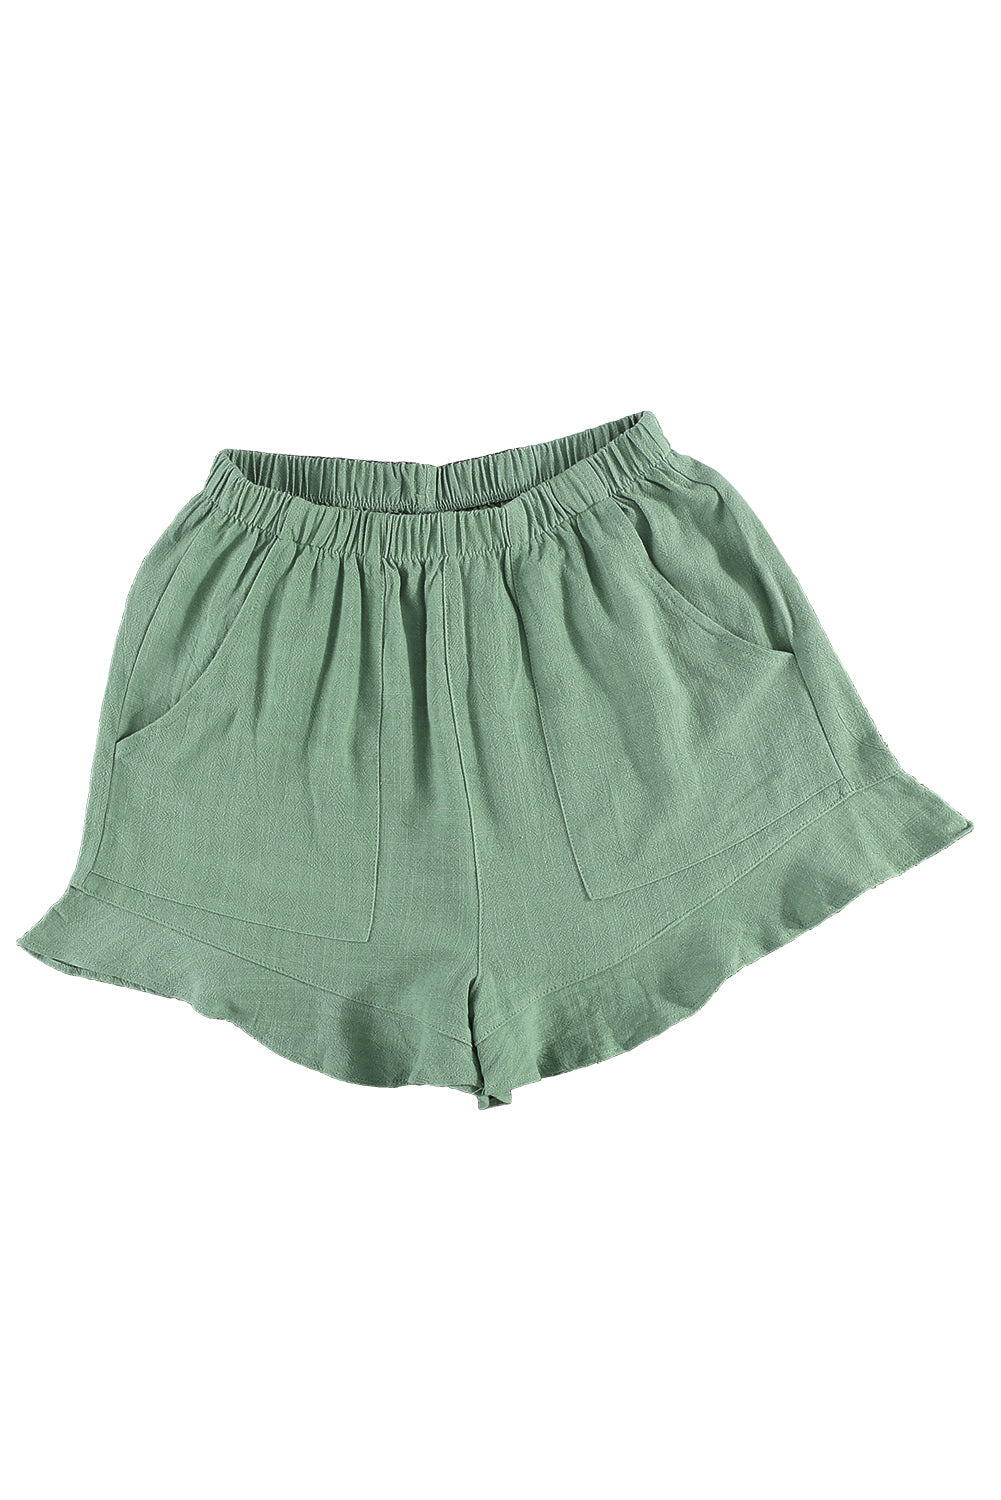 Green High Waist Pocketed Ruffle Shorts